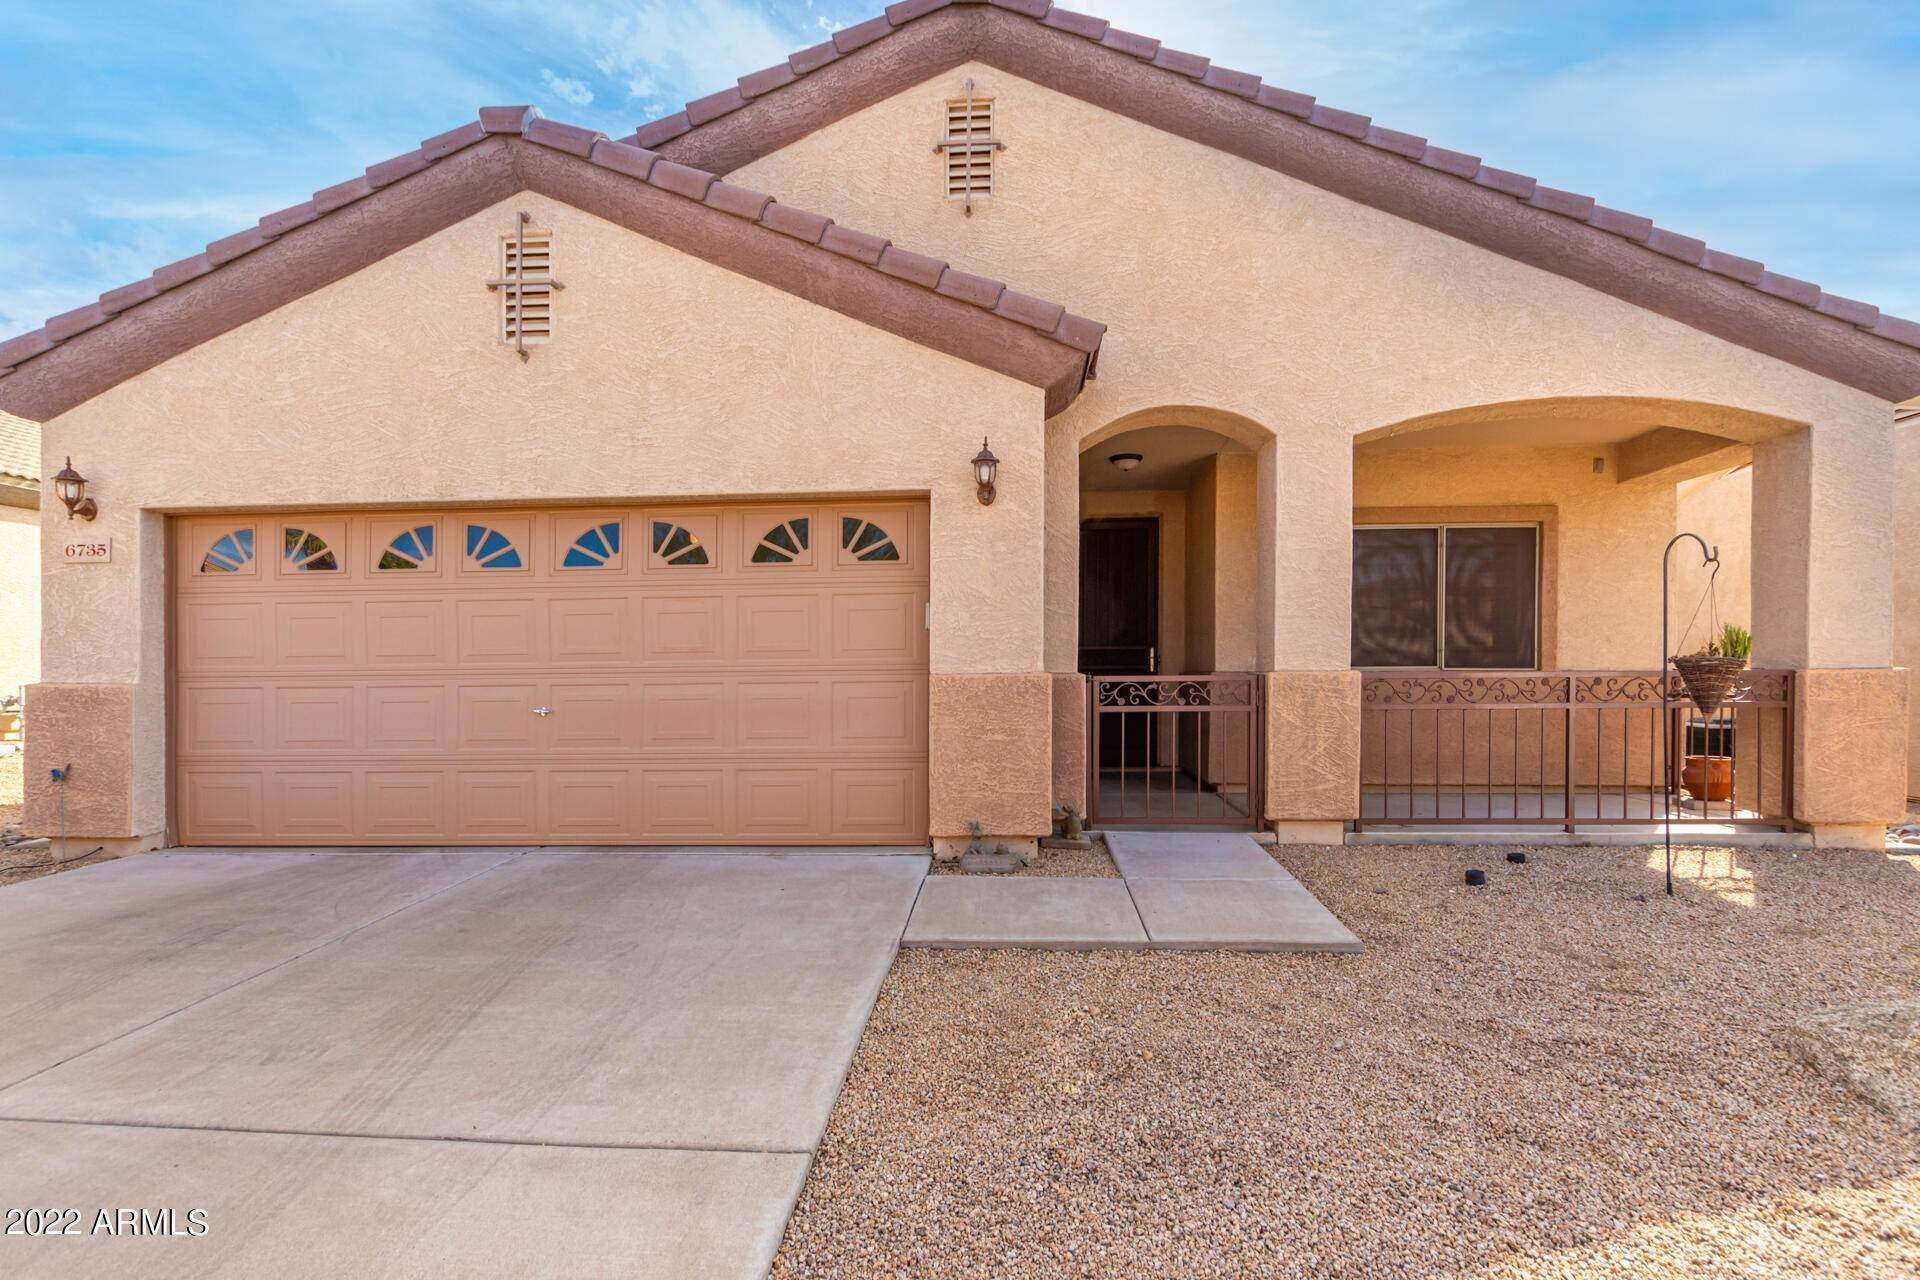 1. Single Family for Sale at Mesa, AZ 85215